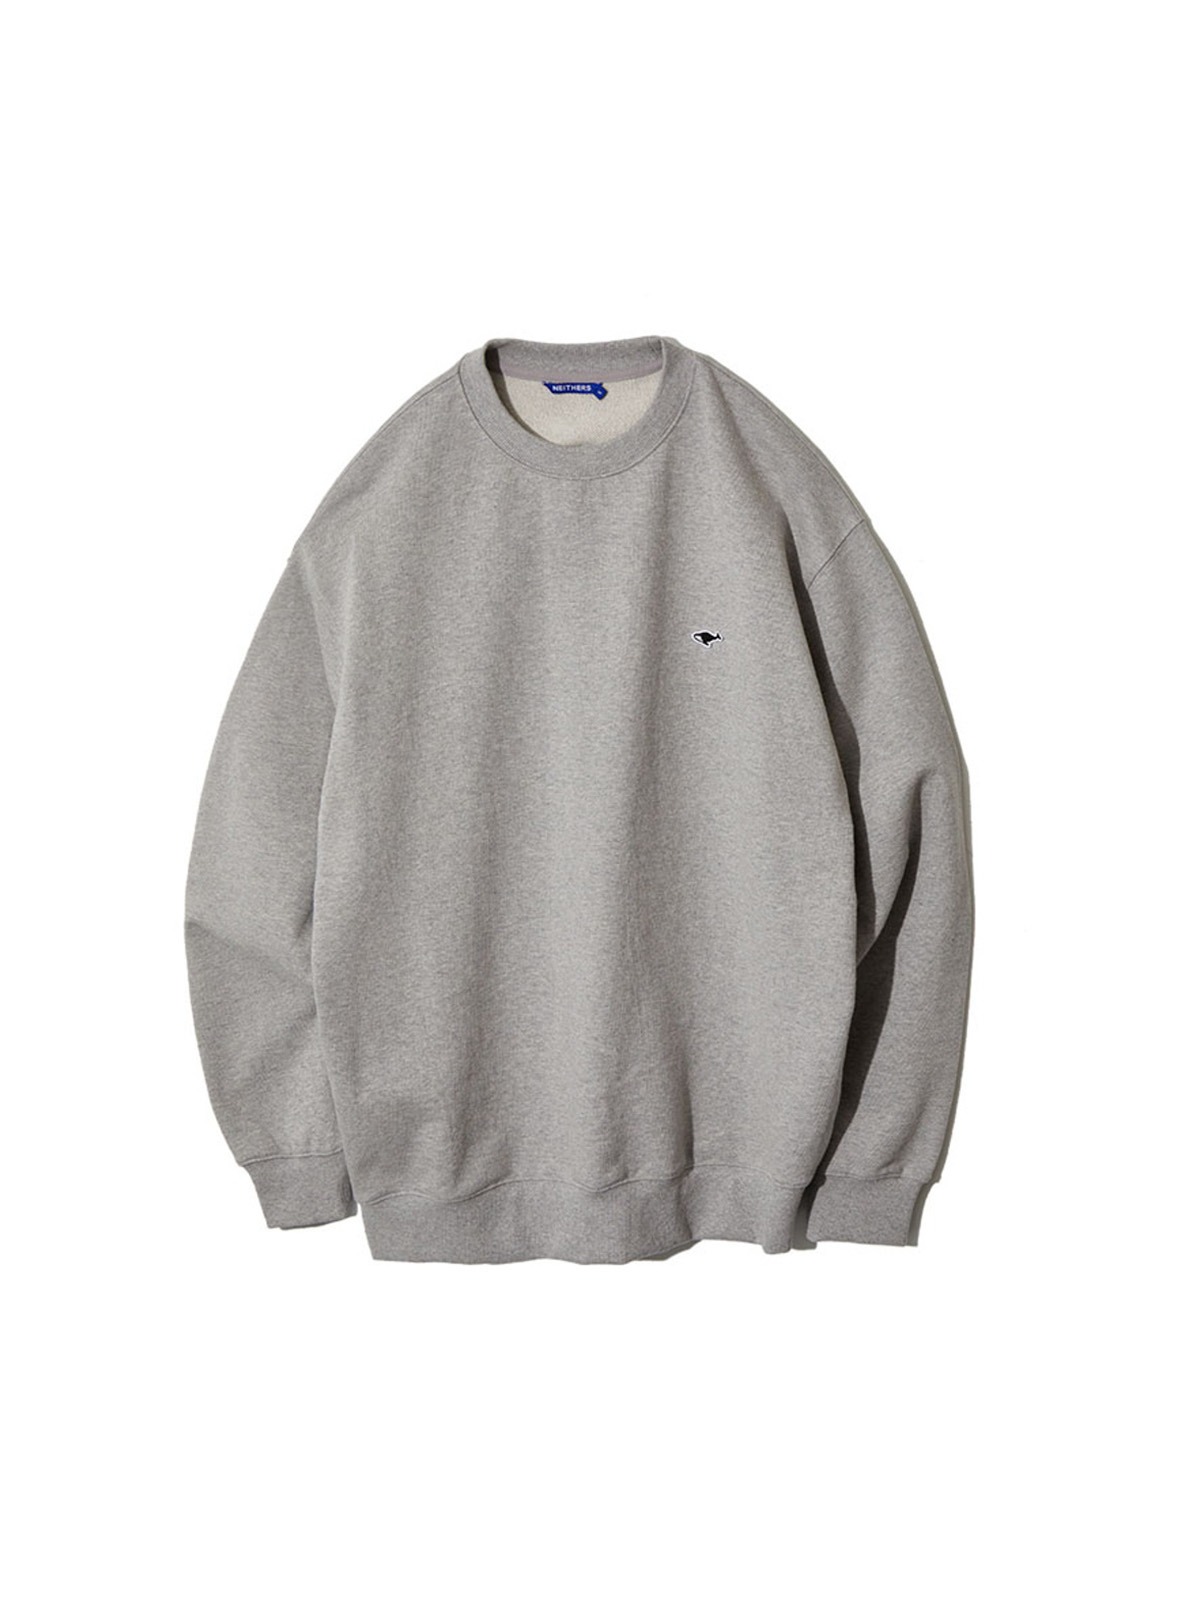 Sweatshirt (Melange Grey)